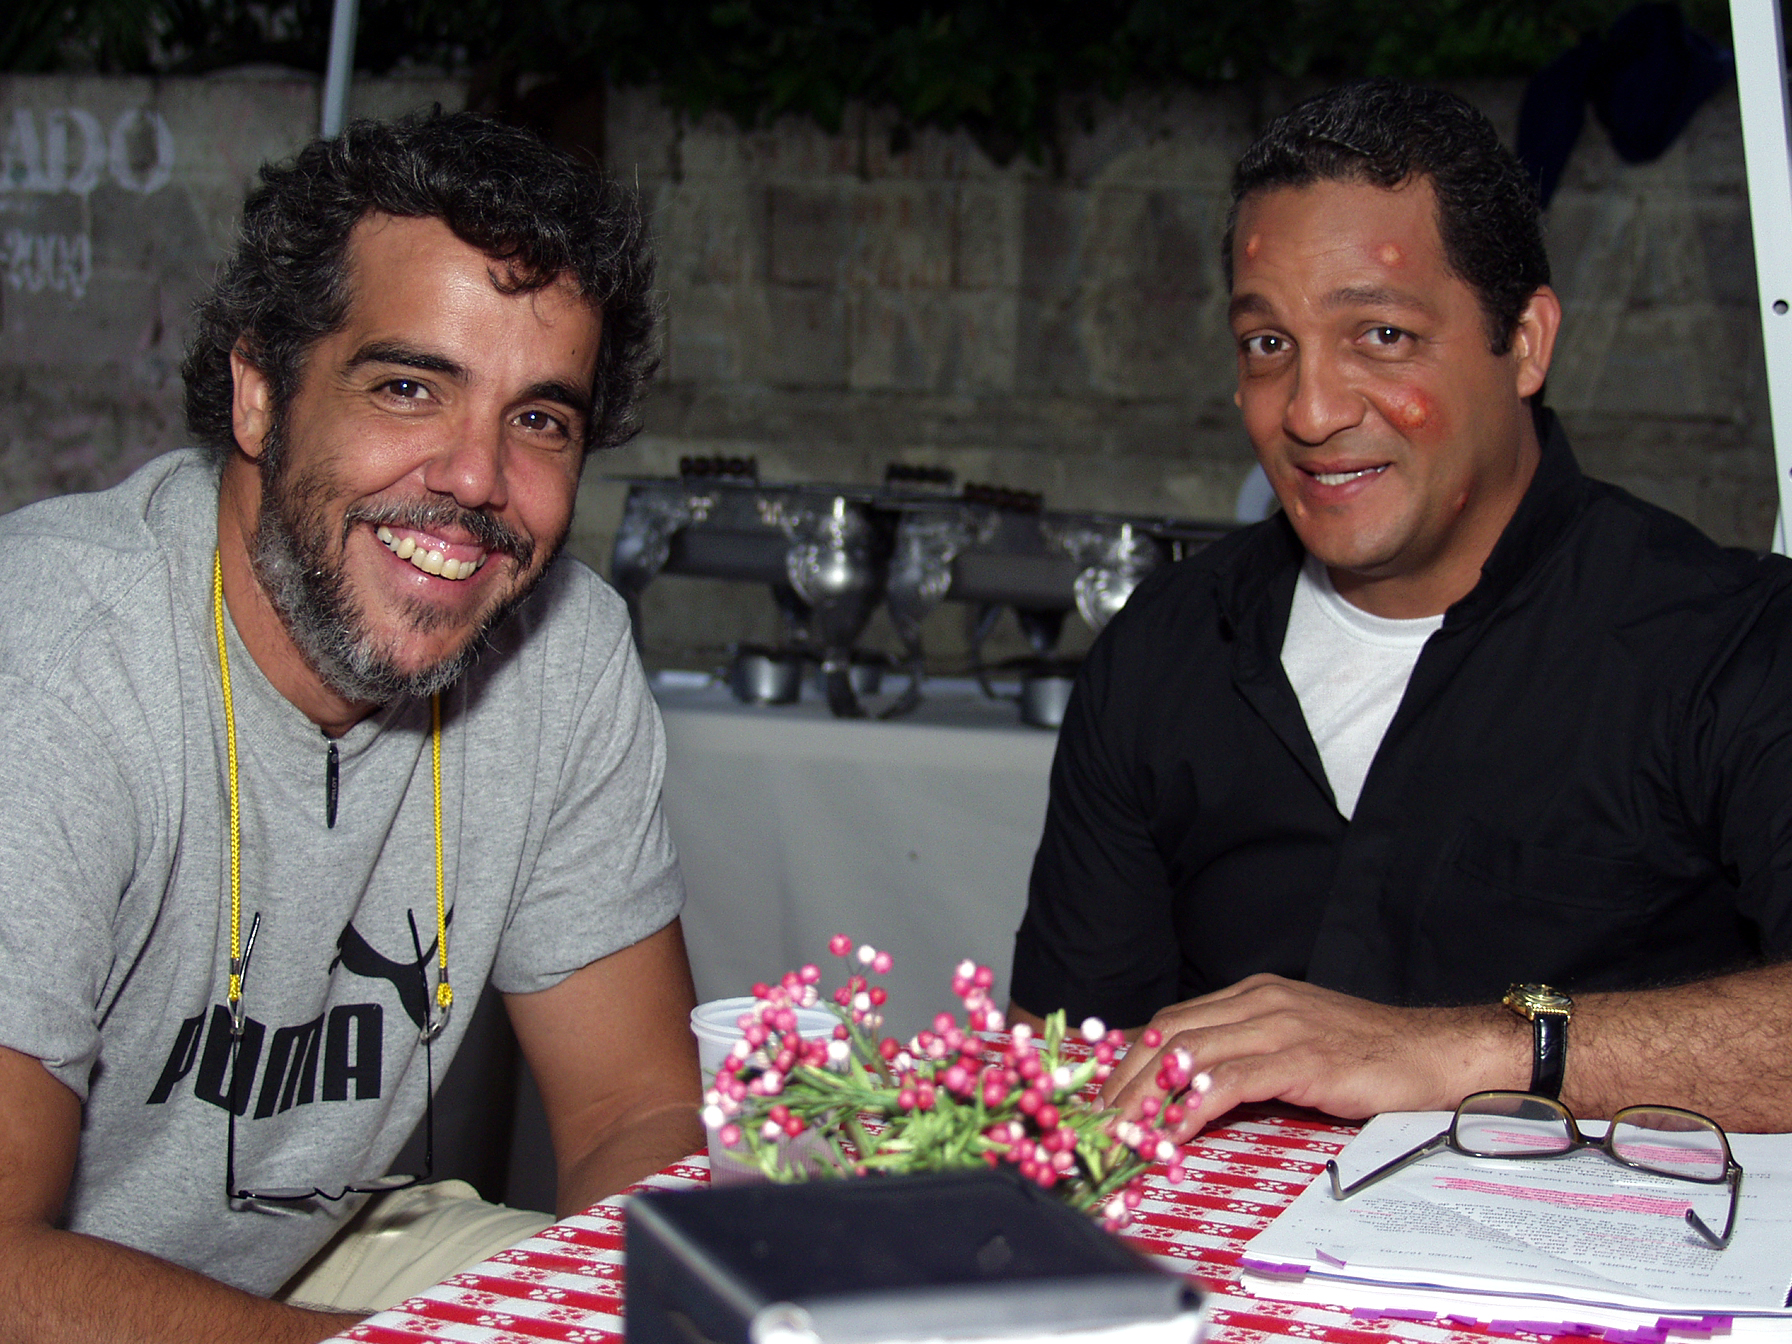 Richard Douglas with the Dominican movie director Angel Muñiz filming 